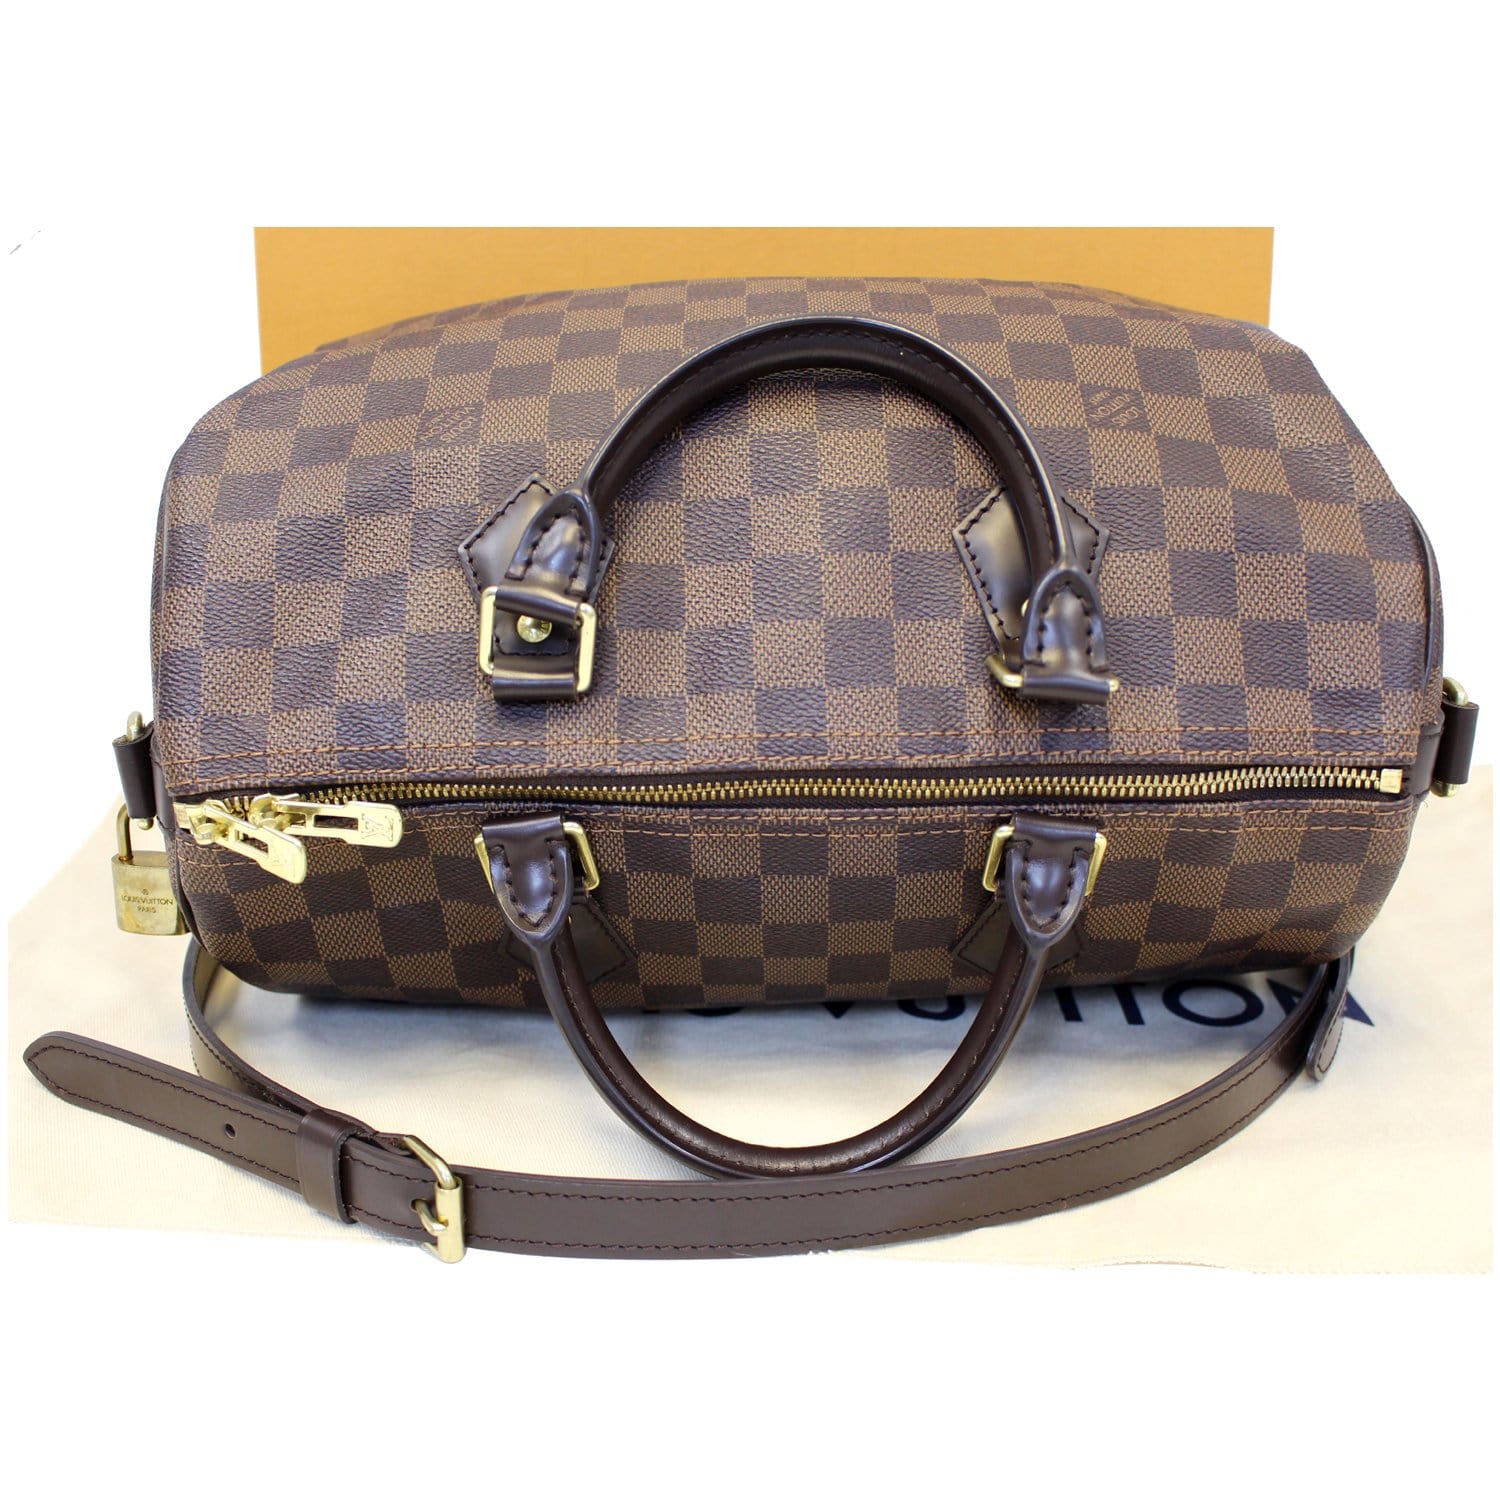 Louis Vuitton Speedy 30 Bandouliere Damier Ebene Shoulder Bag